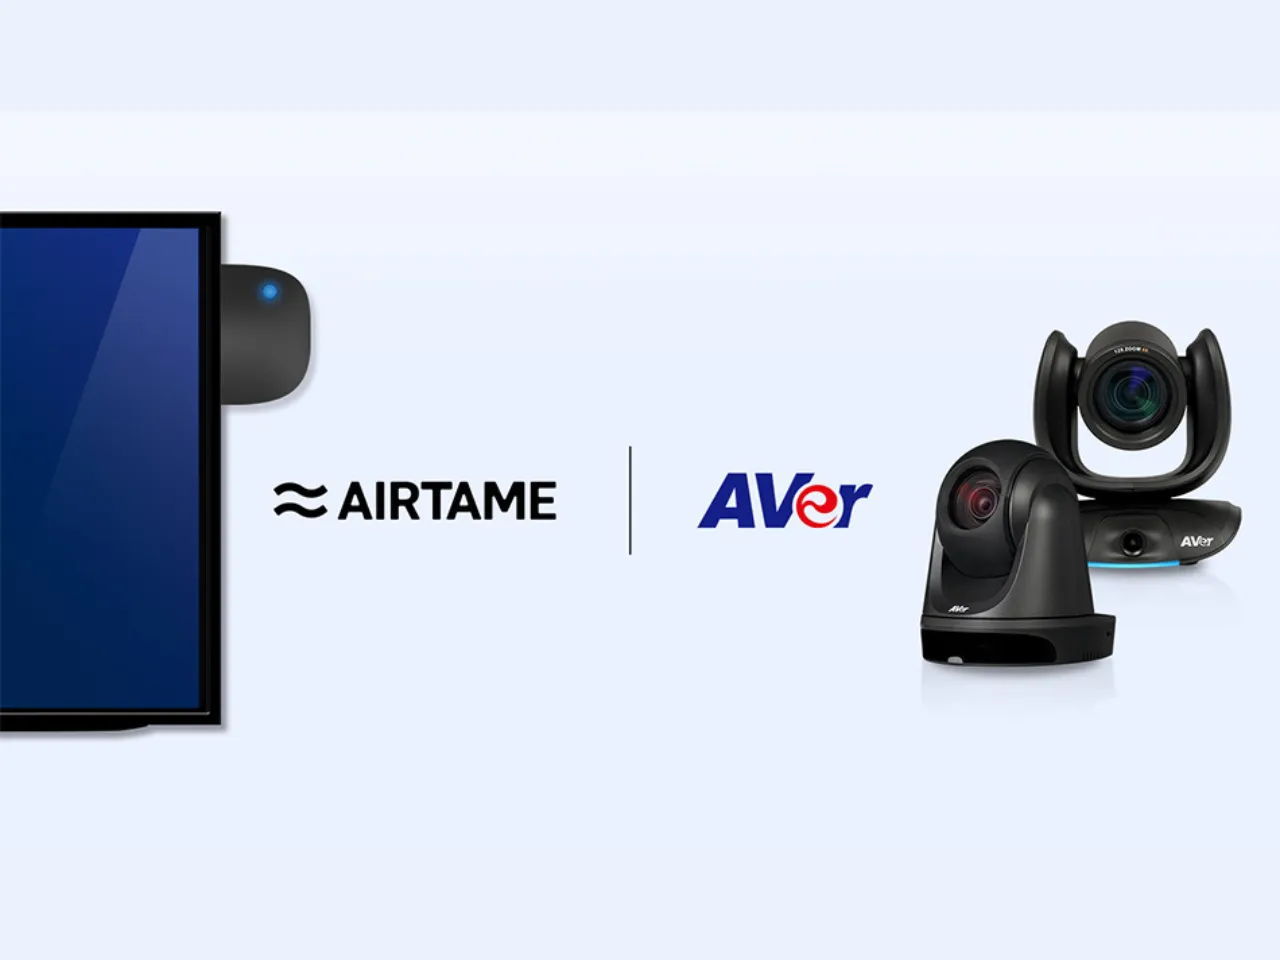 AVer airtime partnership